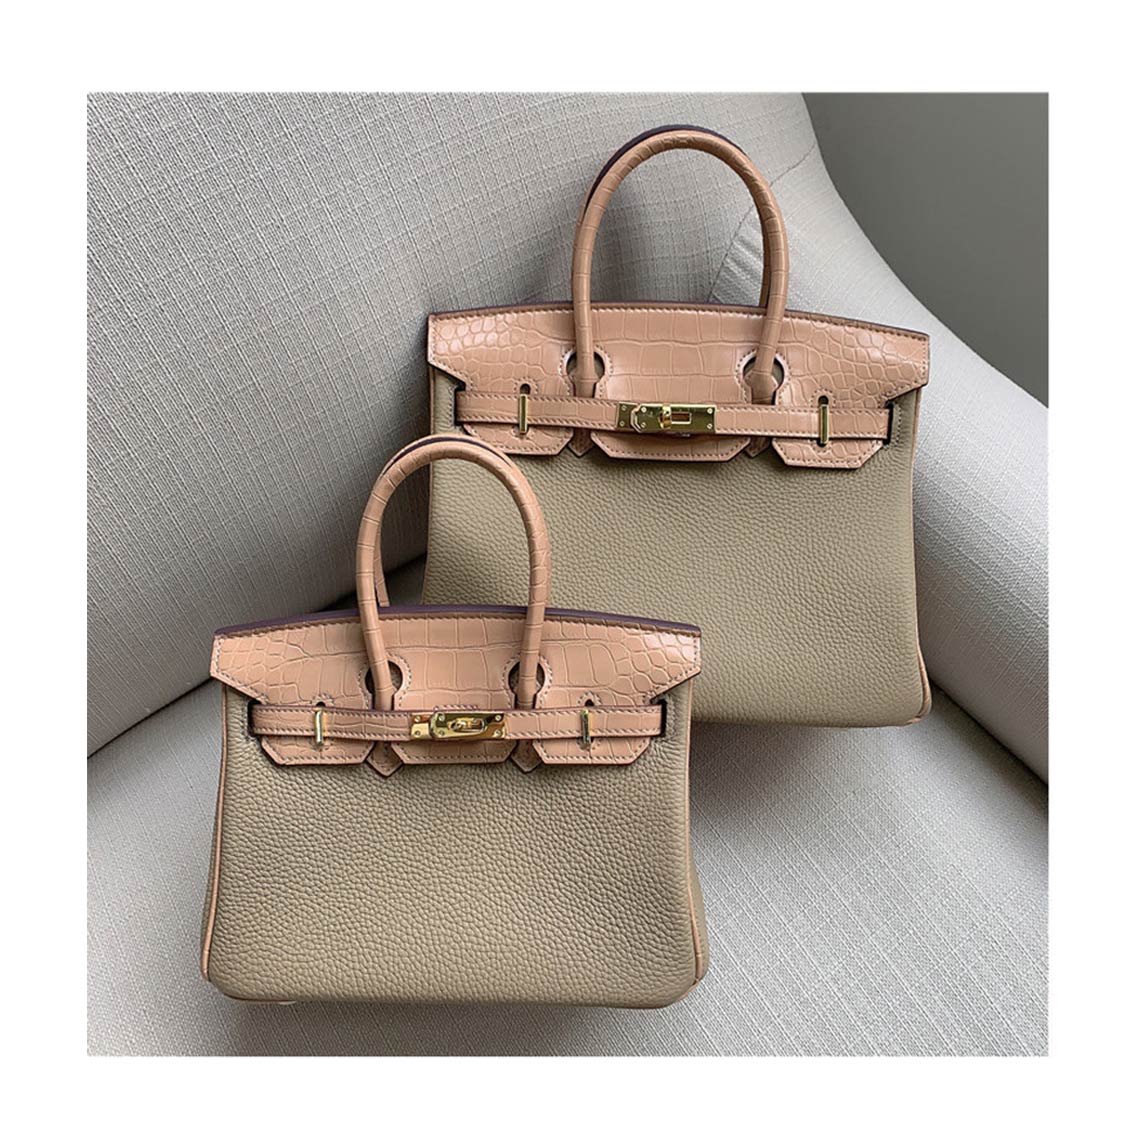 Beige Leather Luxury Handbag with Crocodile Flap | Birkin Size 25 and 30